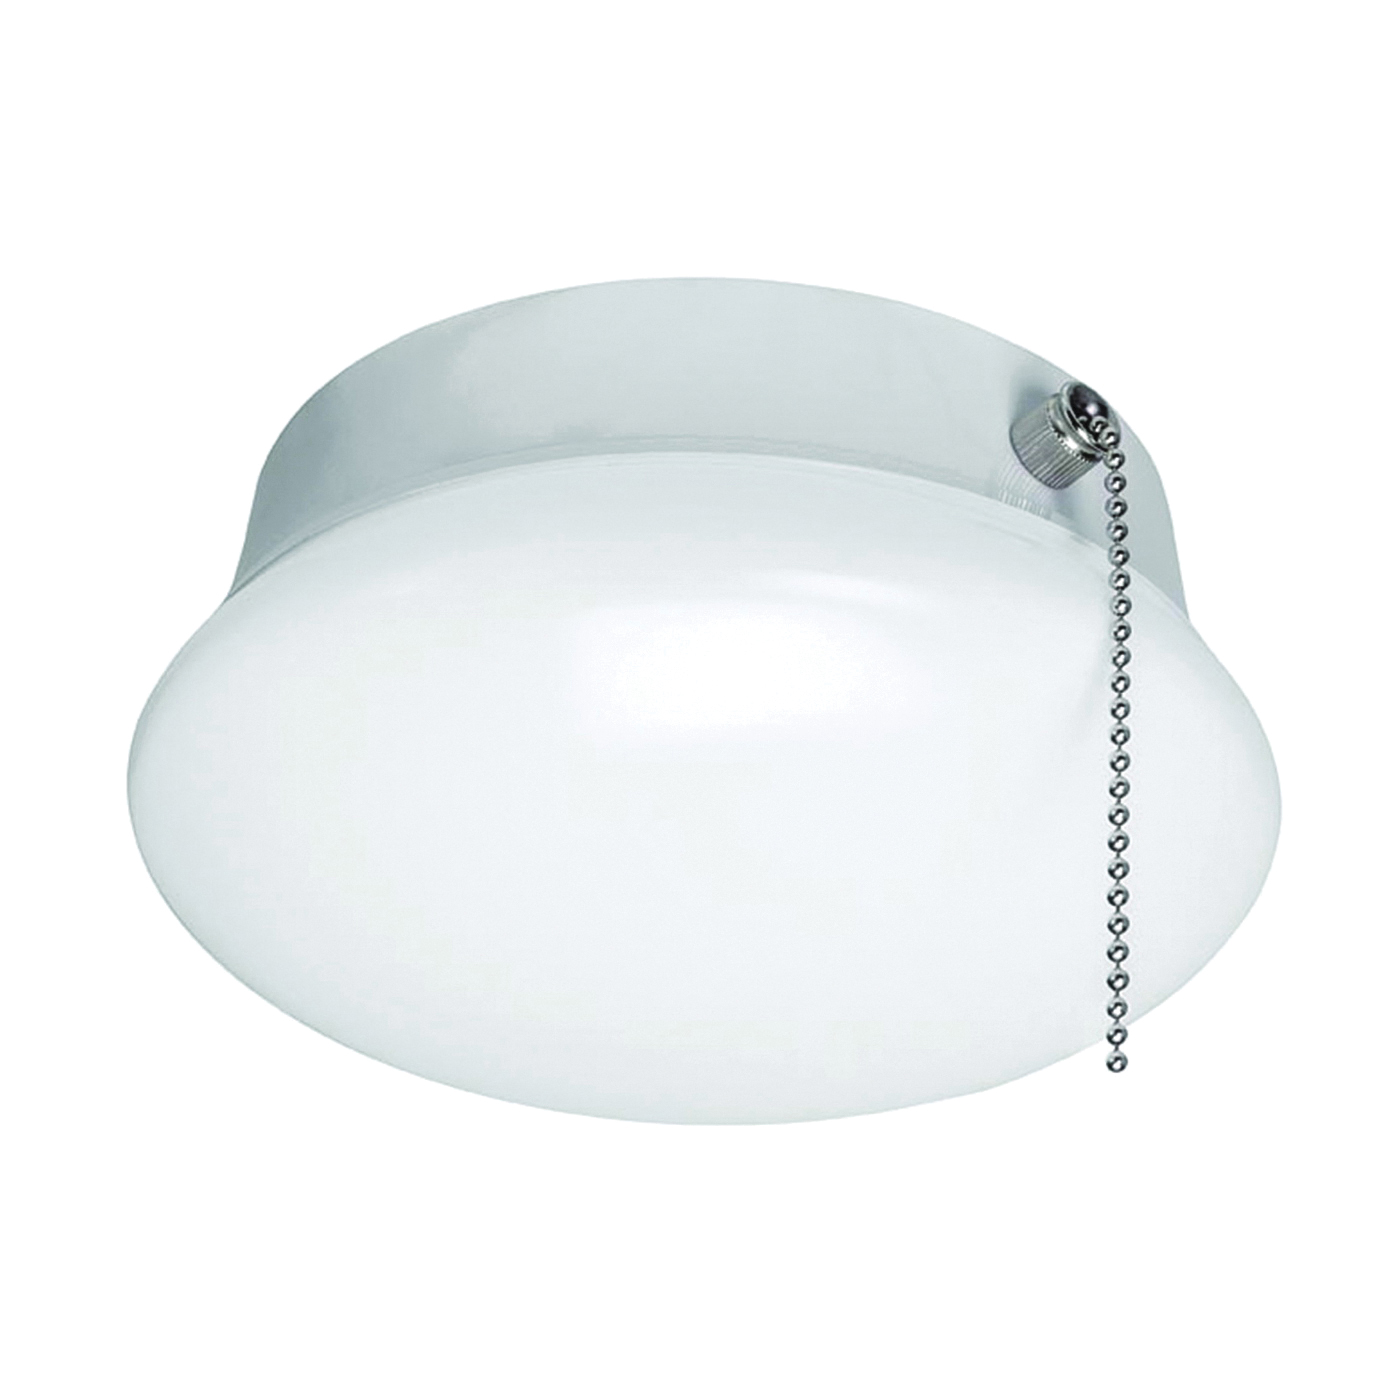 ETI 54617141 Spin Light Fixture, 120 VAC, 11.5 W, 1-Lamp, LED Lamp, 830 Lumens, 4000 K Color Temp - 1